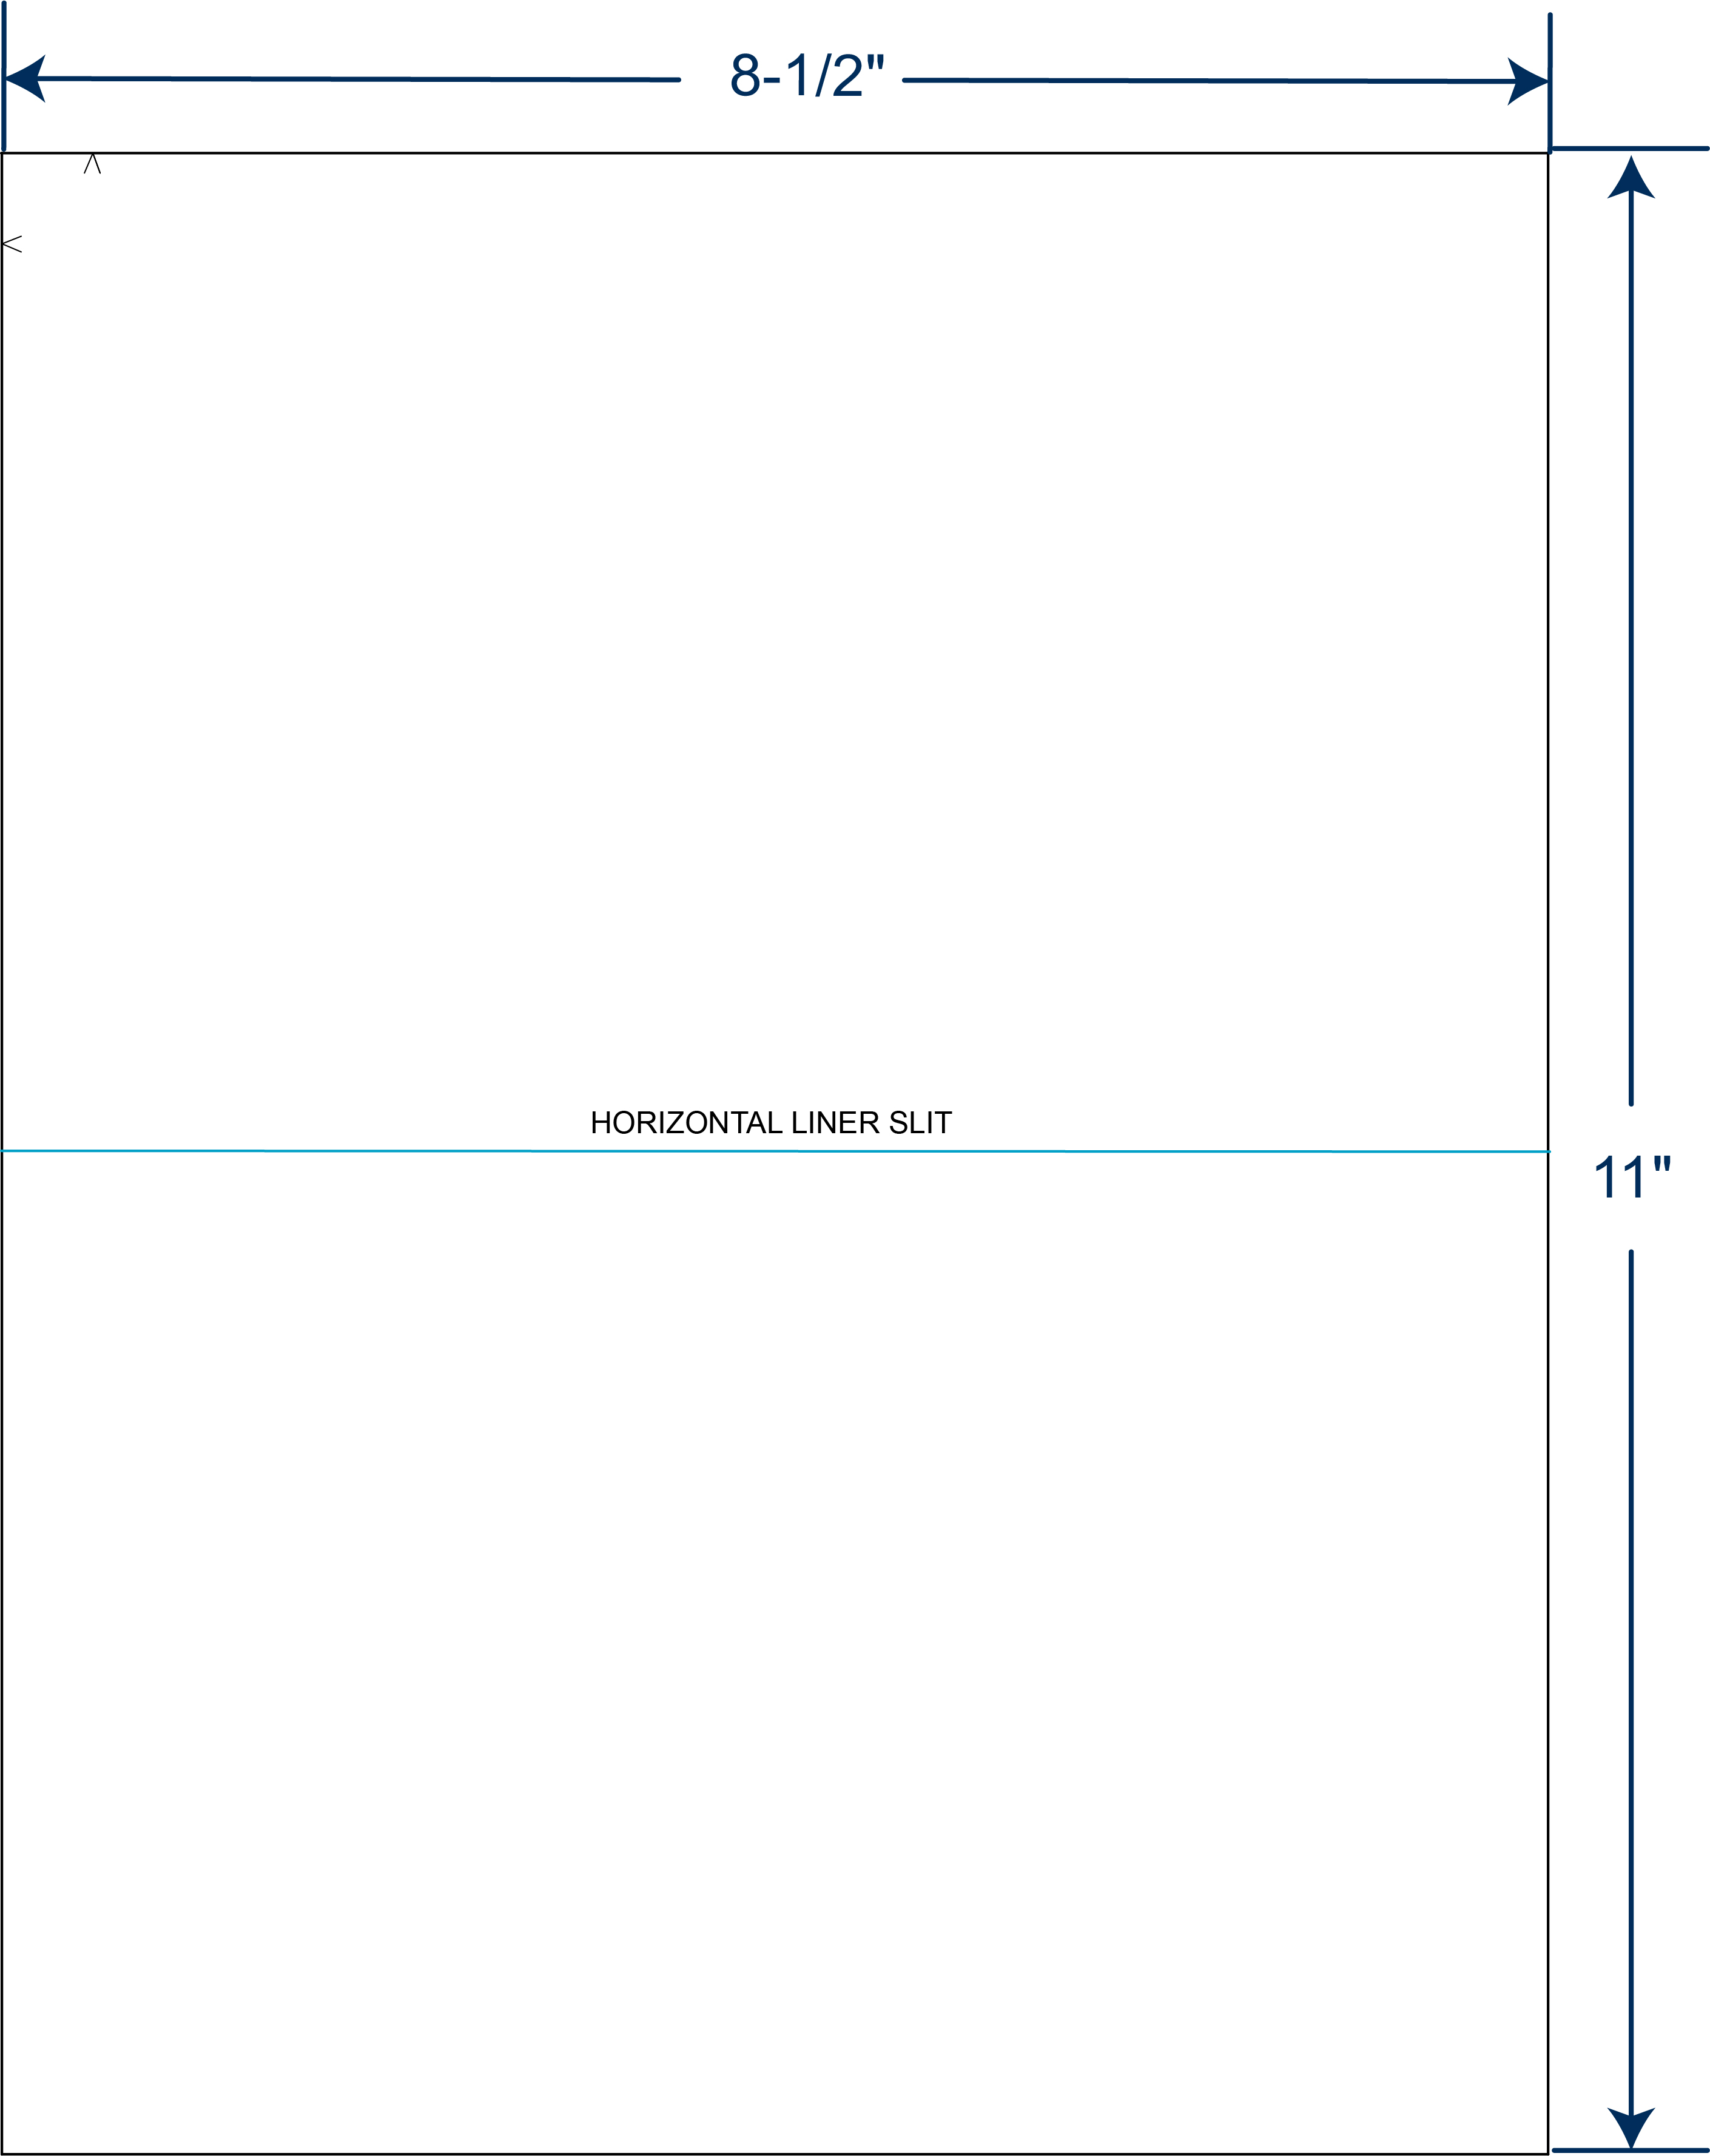 8-1/2" x 11" Horizontal Liner Slit Sheeted Labels (1,000 Sheets)